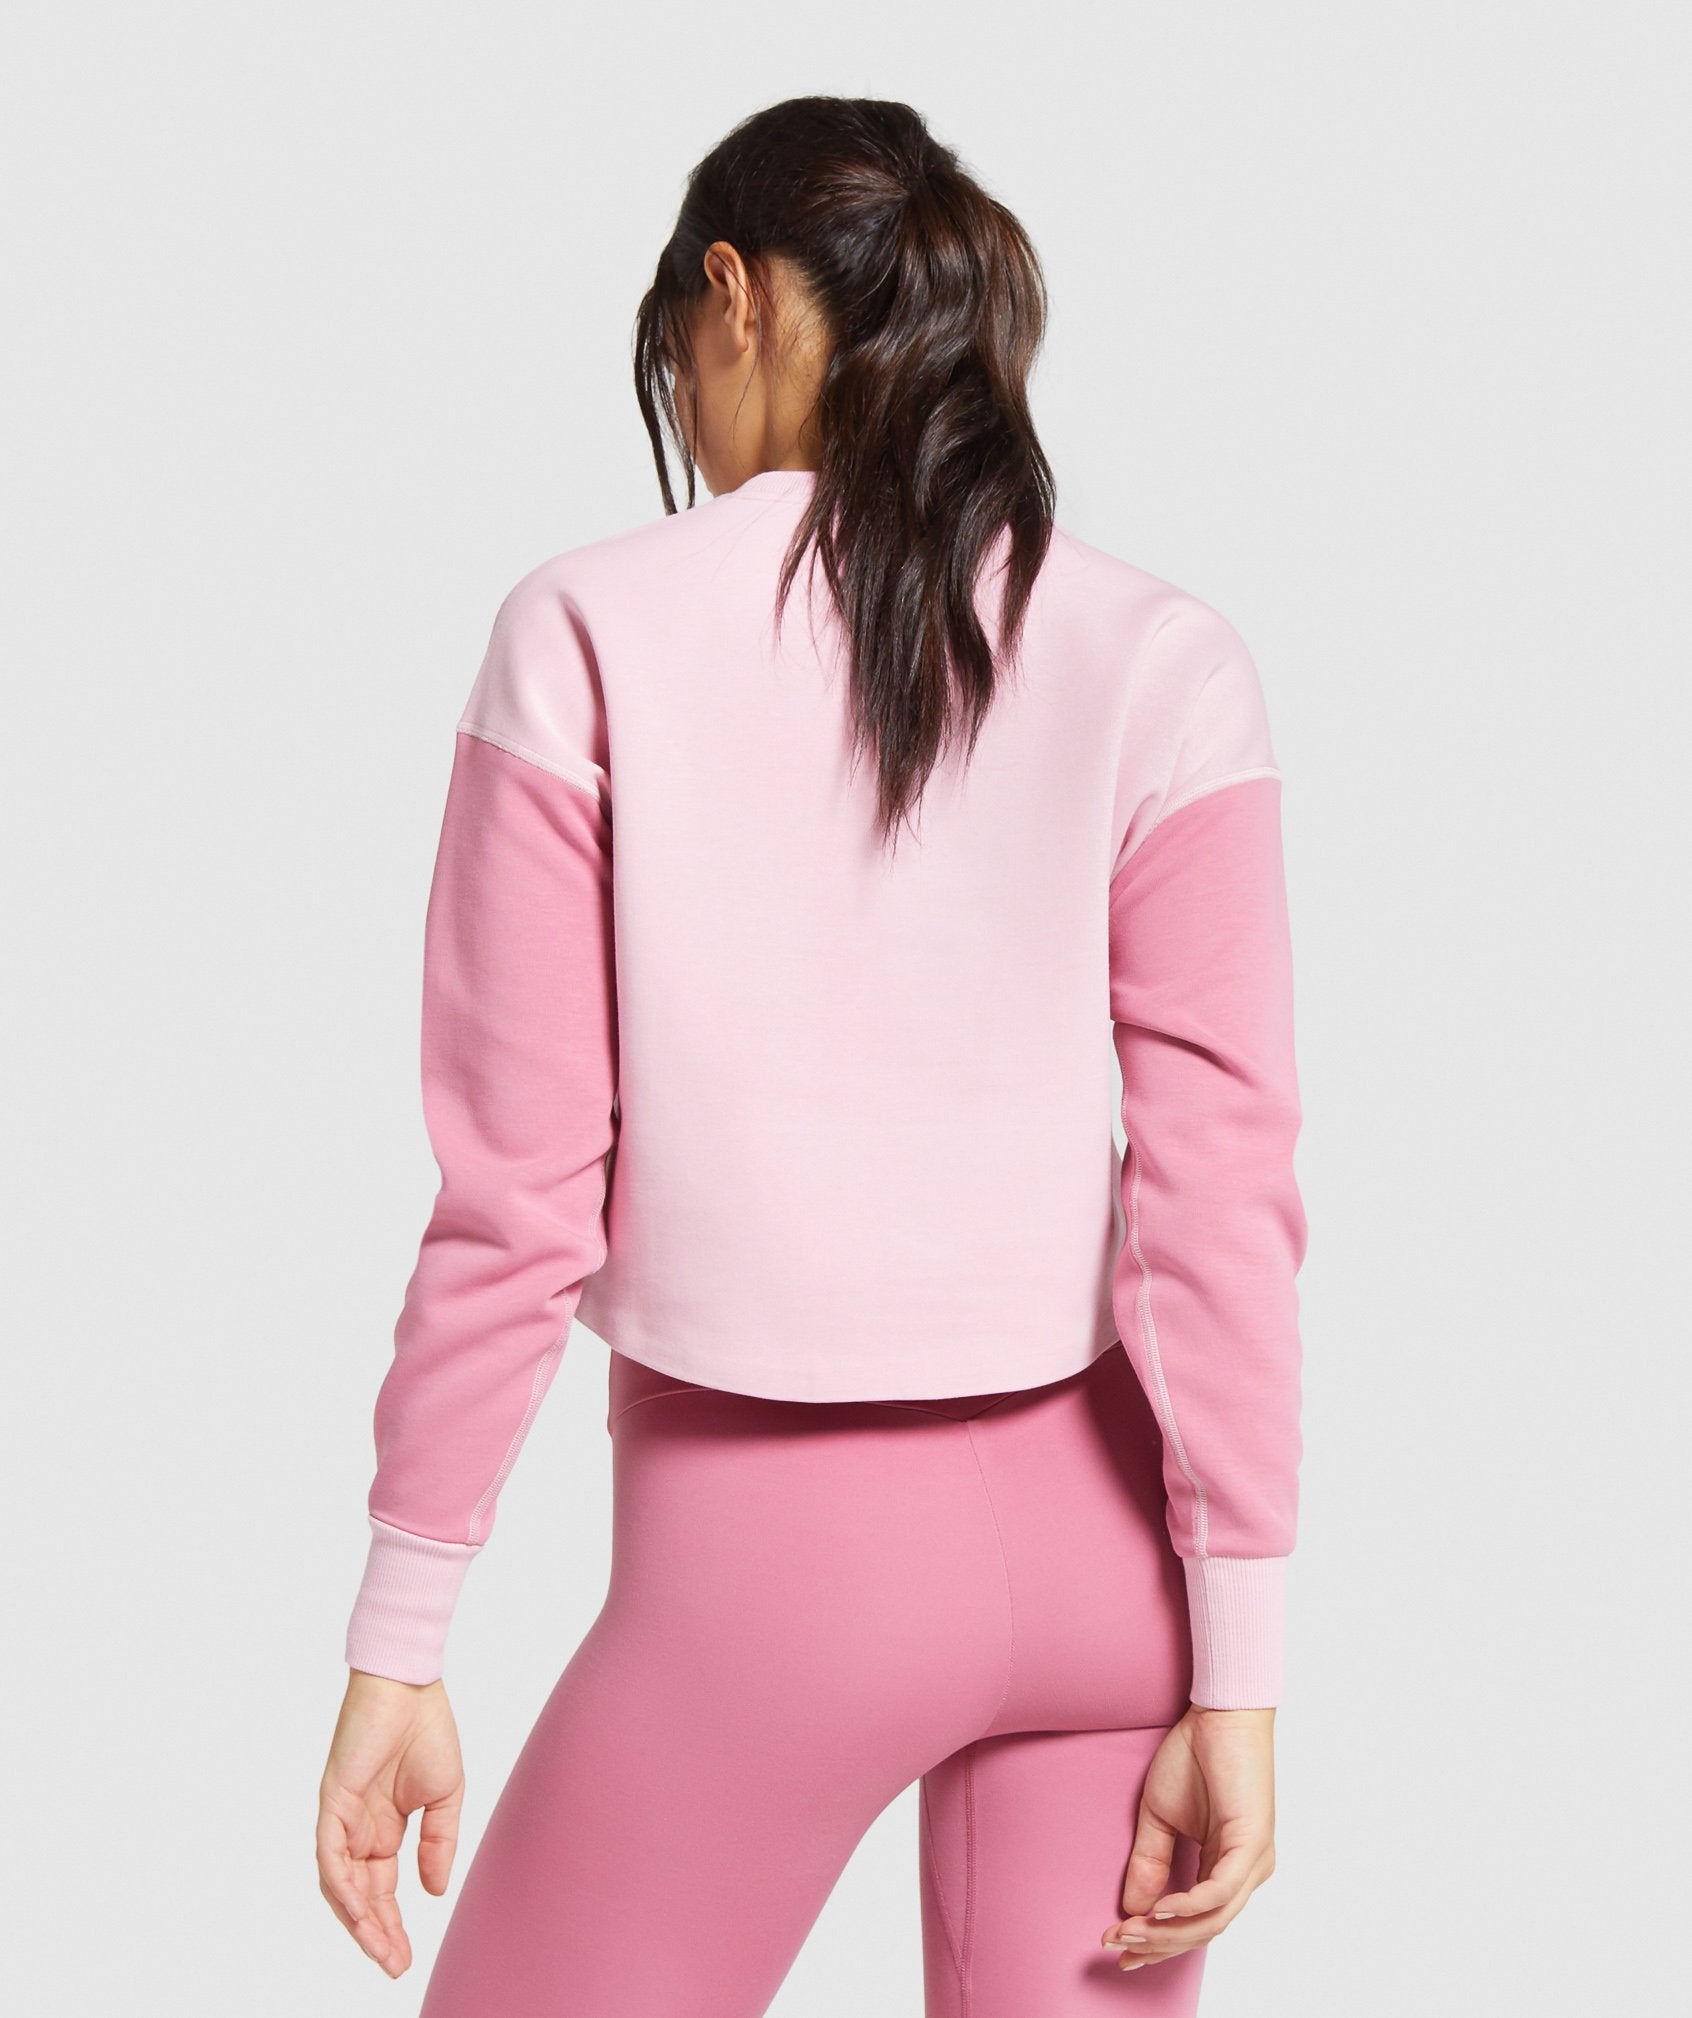 Rewind Sweater in Pink - view 2